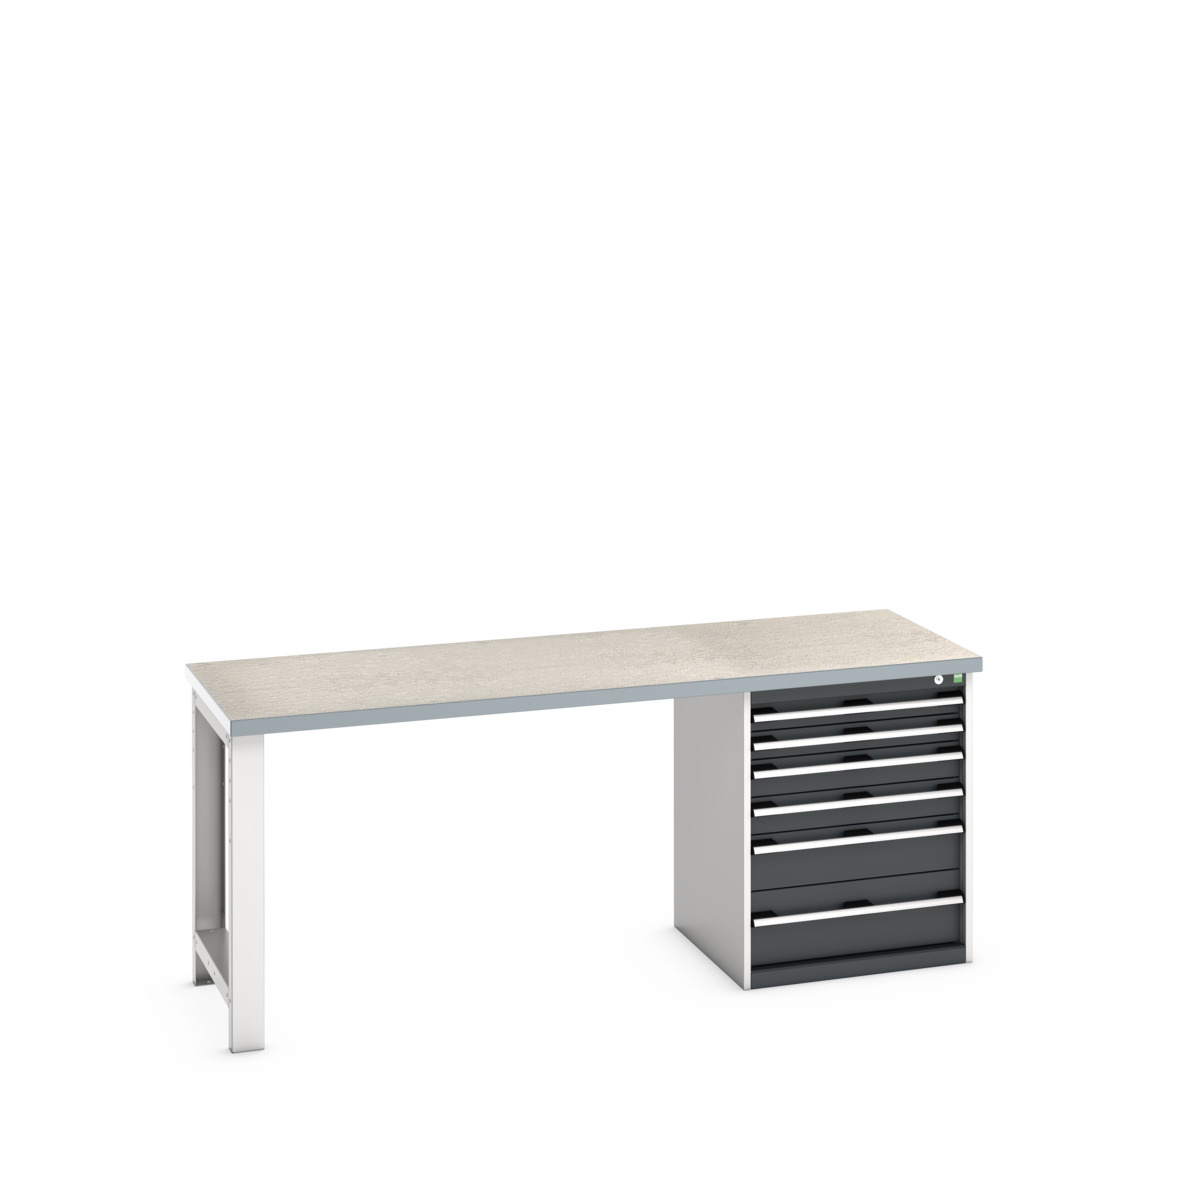 41003237. - cubio pedestal bench (lino)